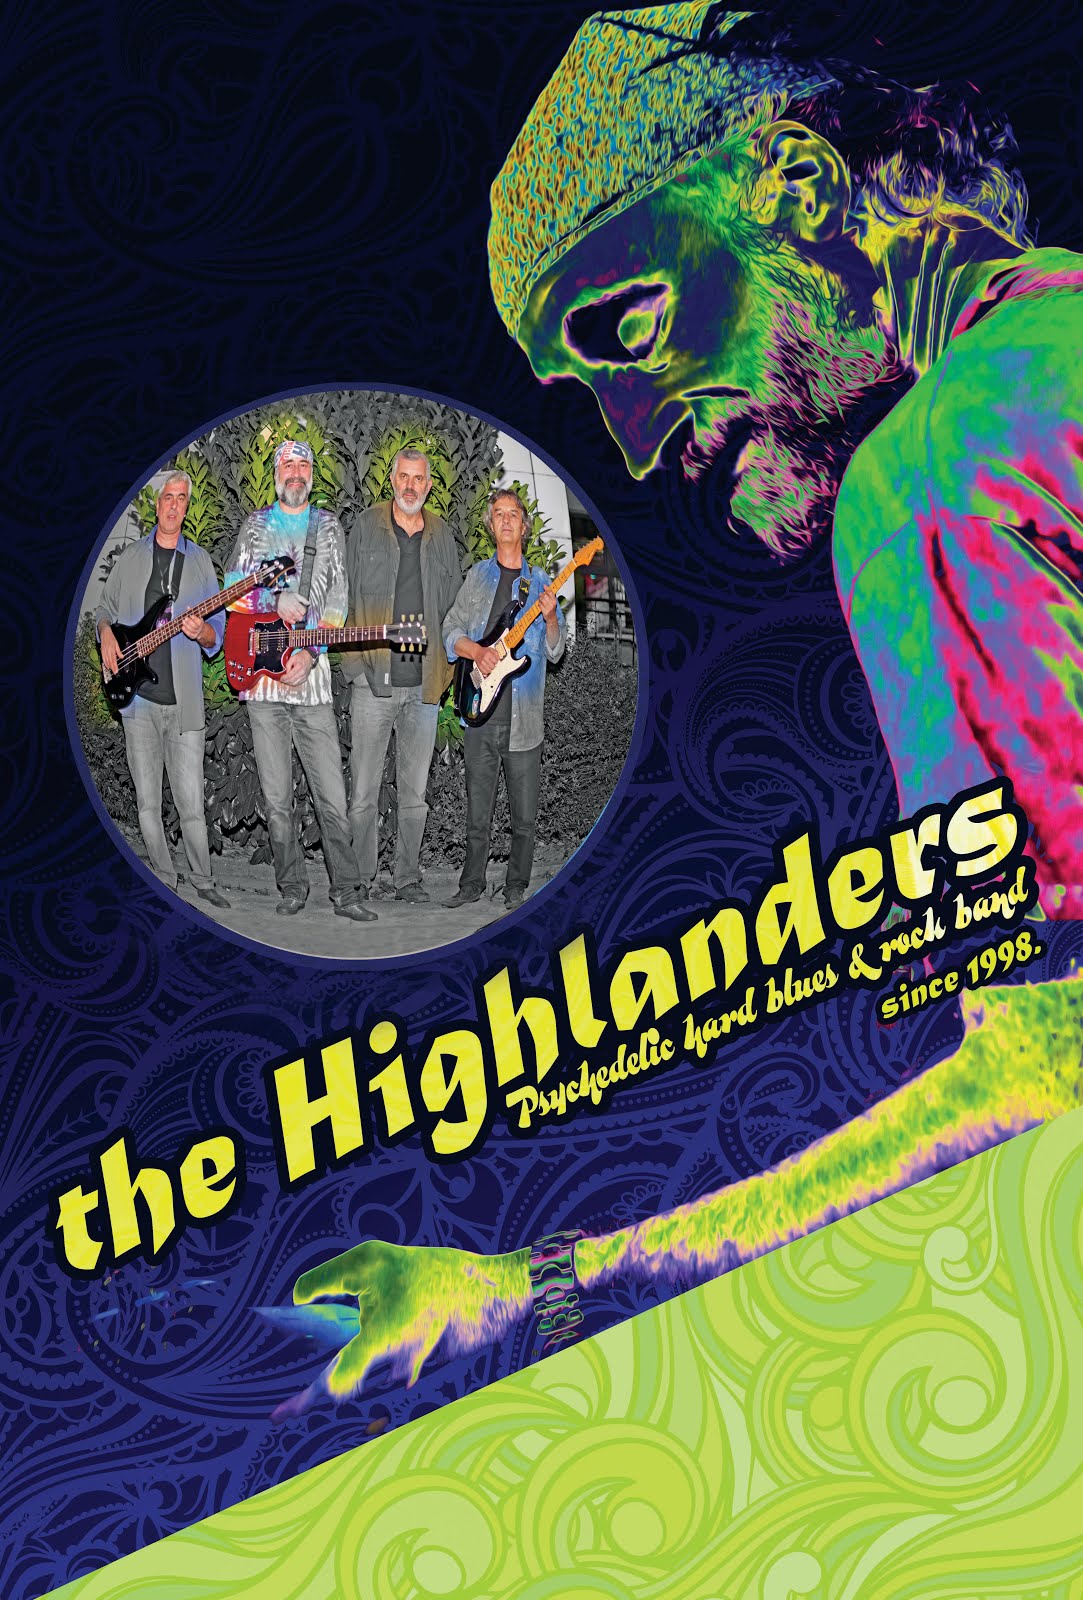 The Highlanders